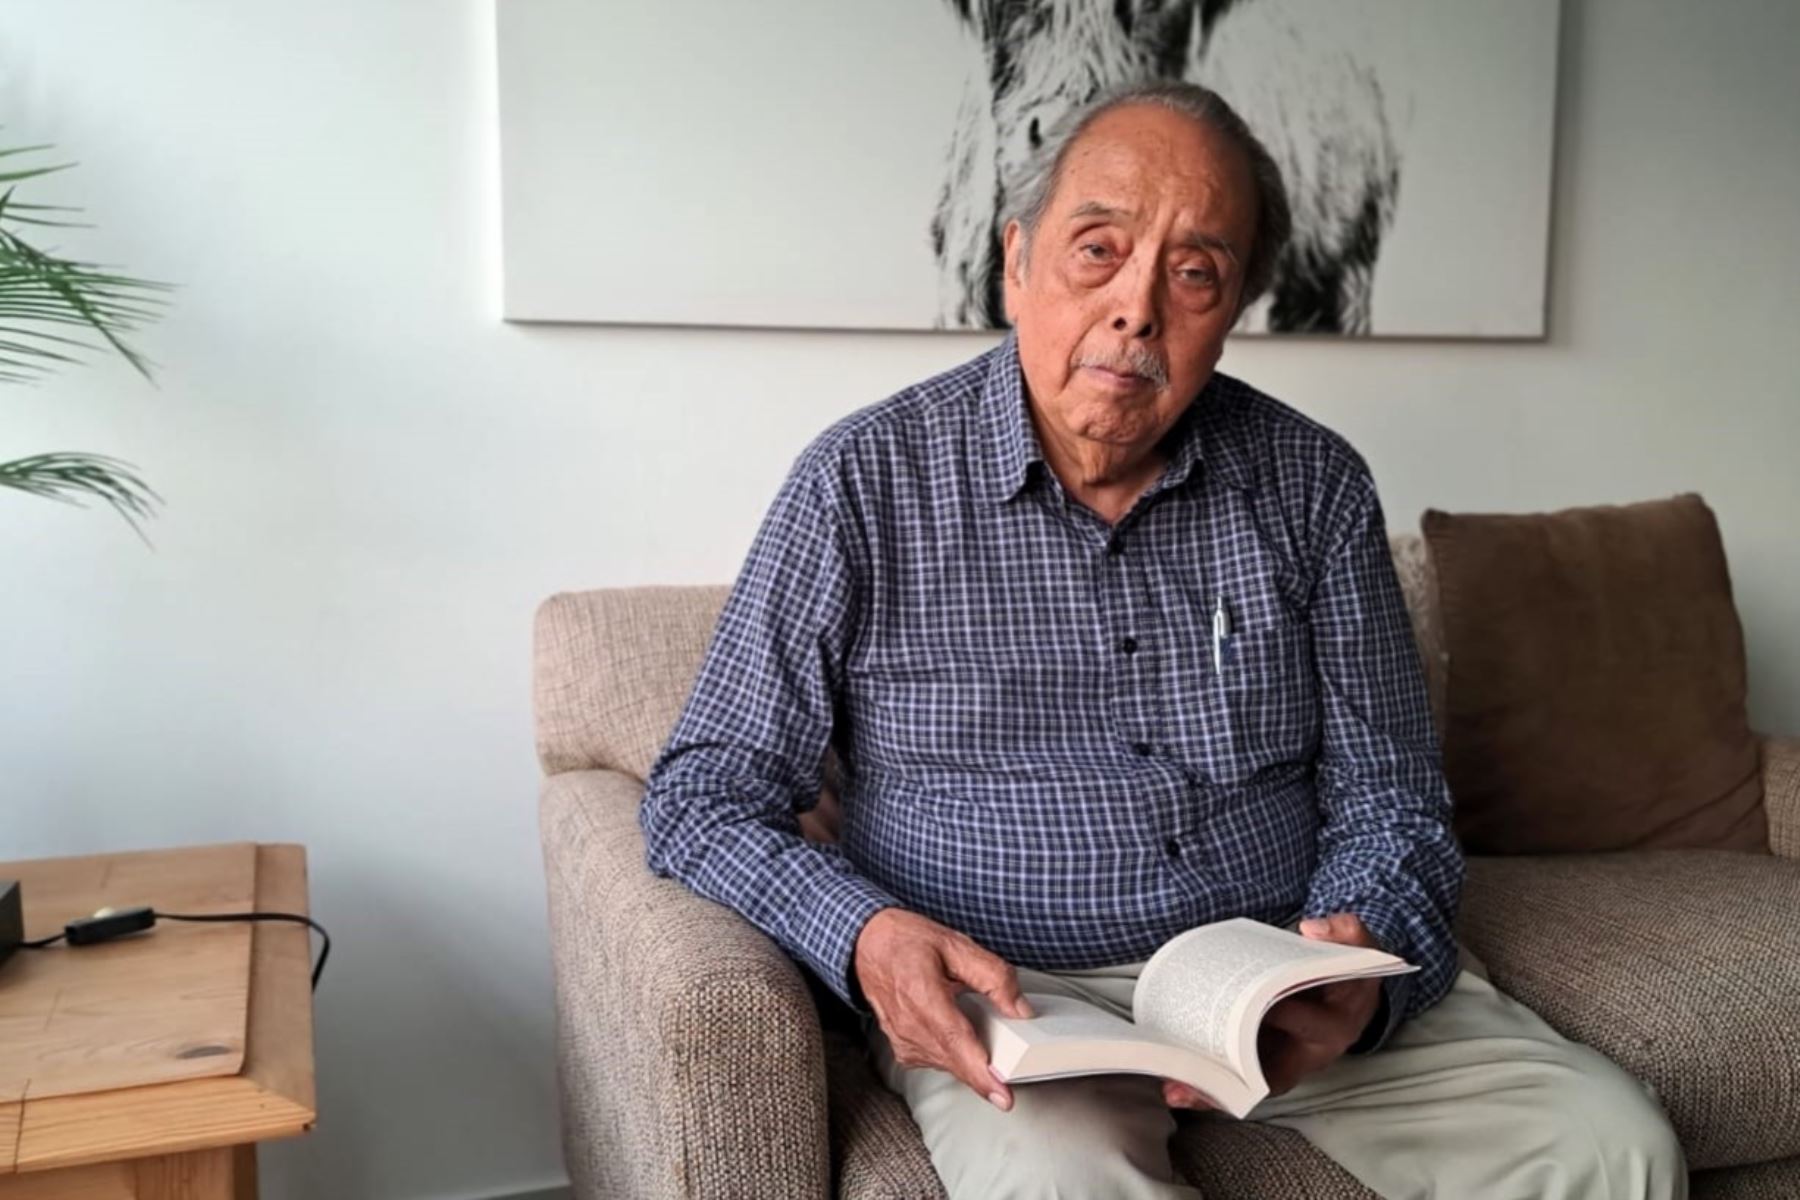 Escritor Juan Morillo Ganoza (Pataz, 1939), autor de la novela 